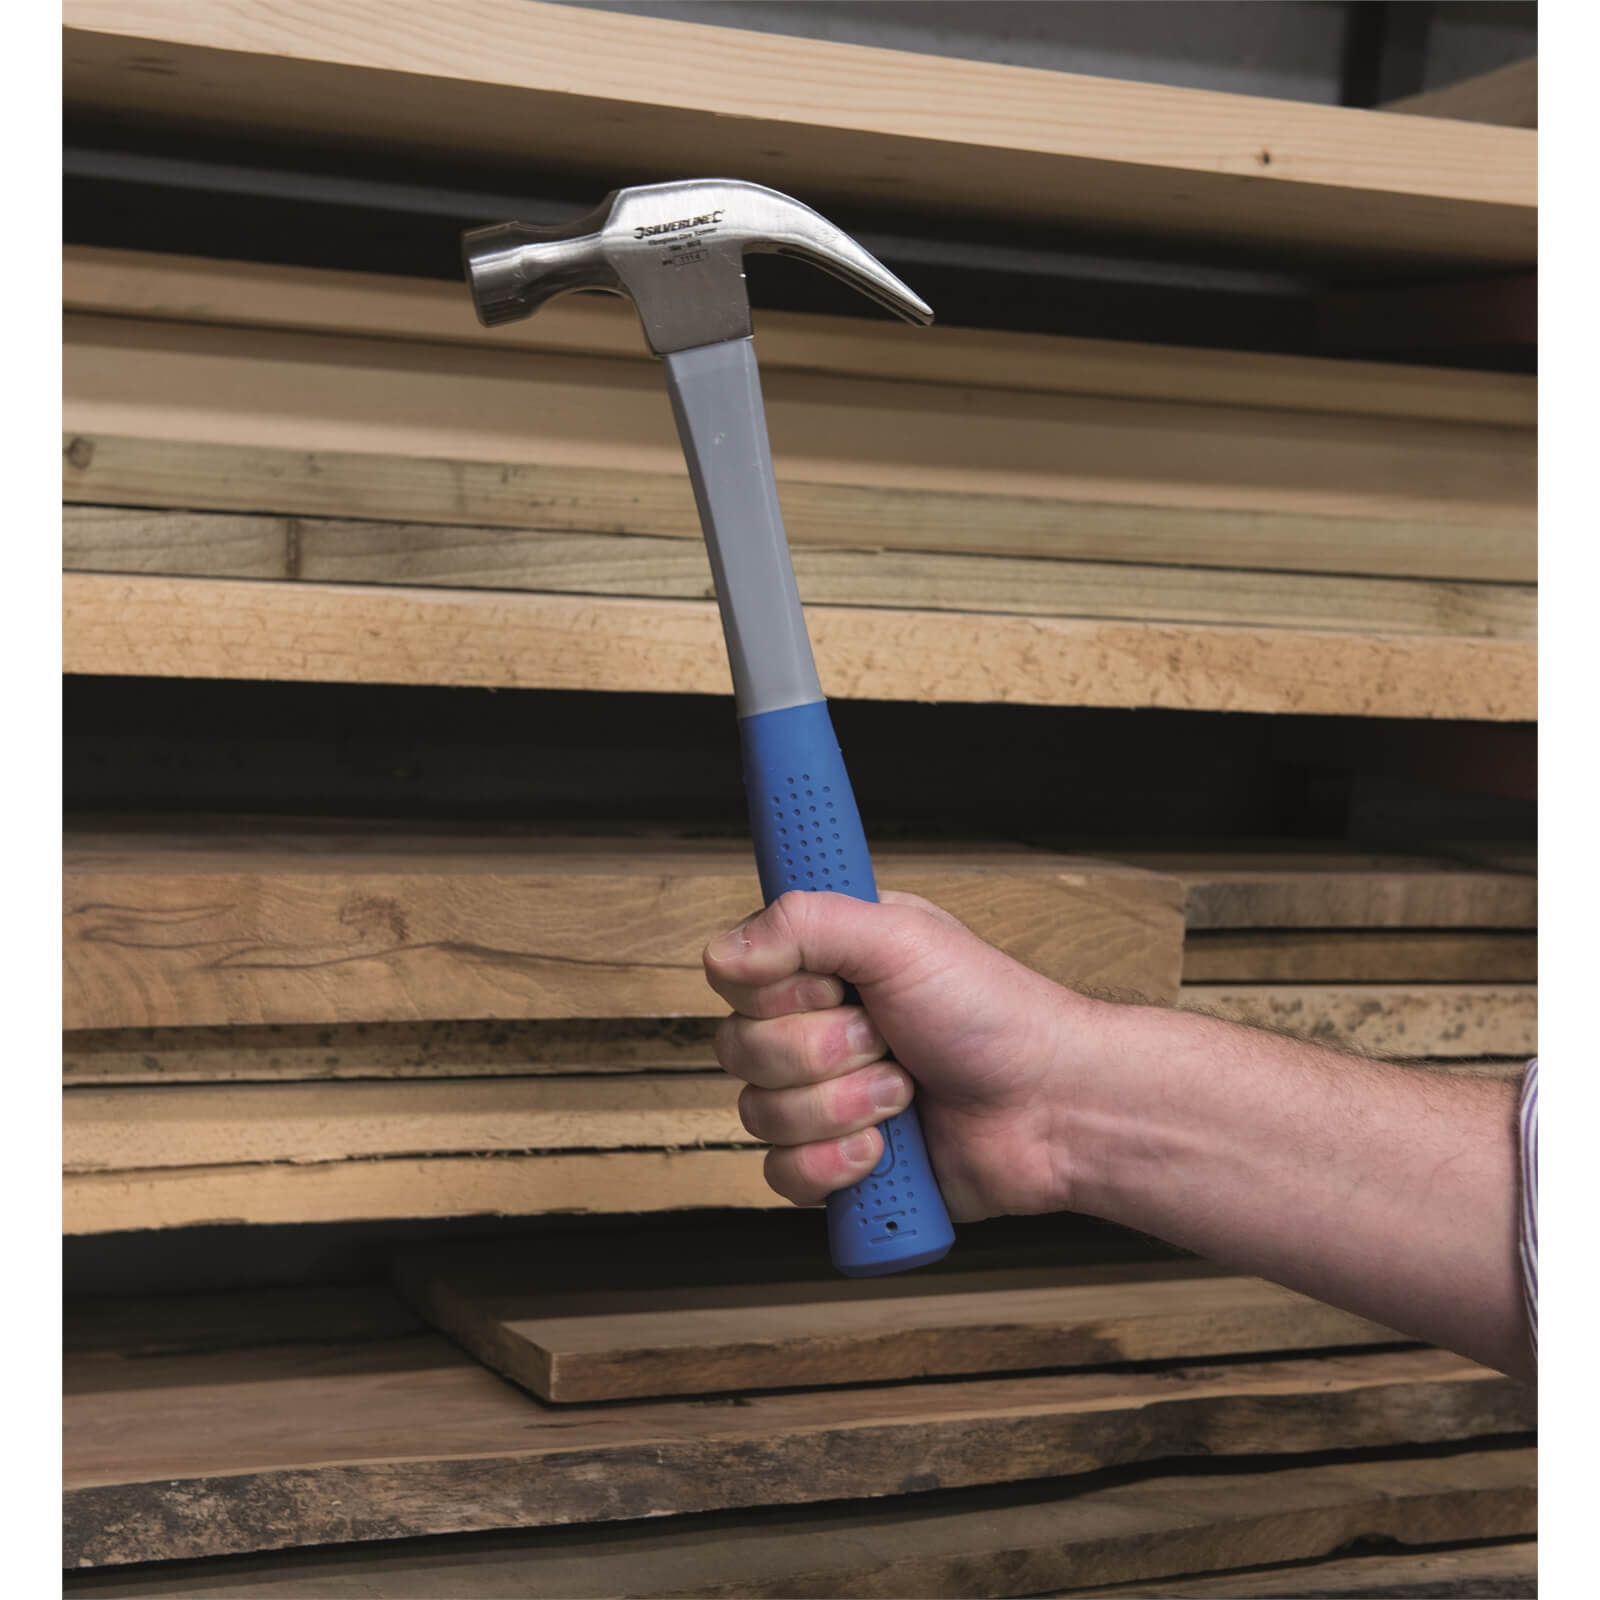 Silverline Fibreglass Claw Hammer - 16oz (454g)